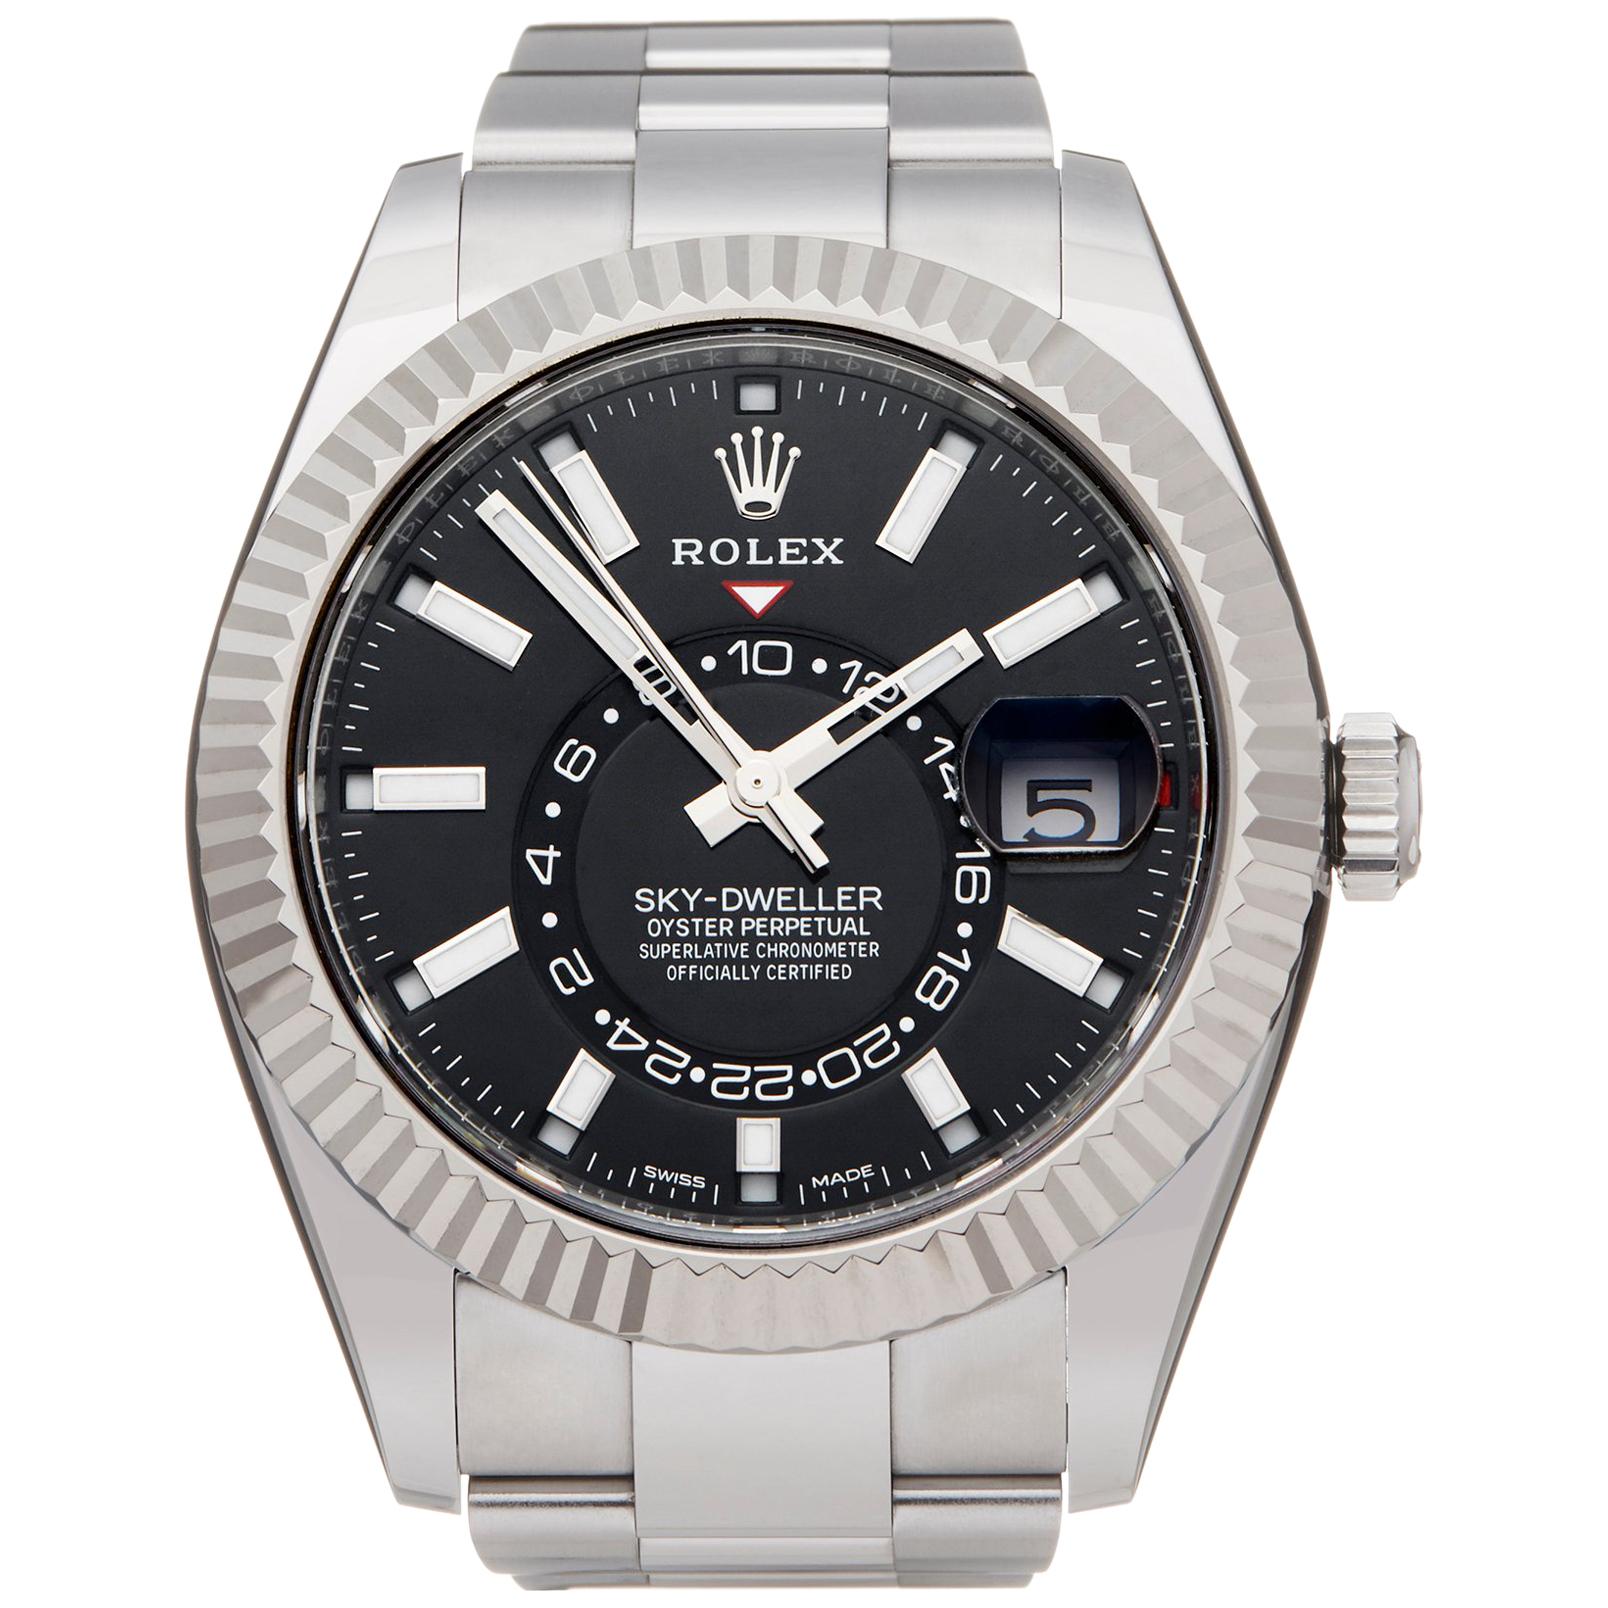 Rolex Sky-Dweller Stainless Steel 326934 Wristwatch